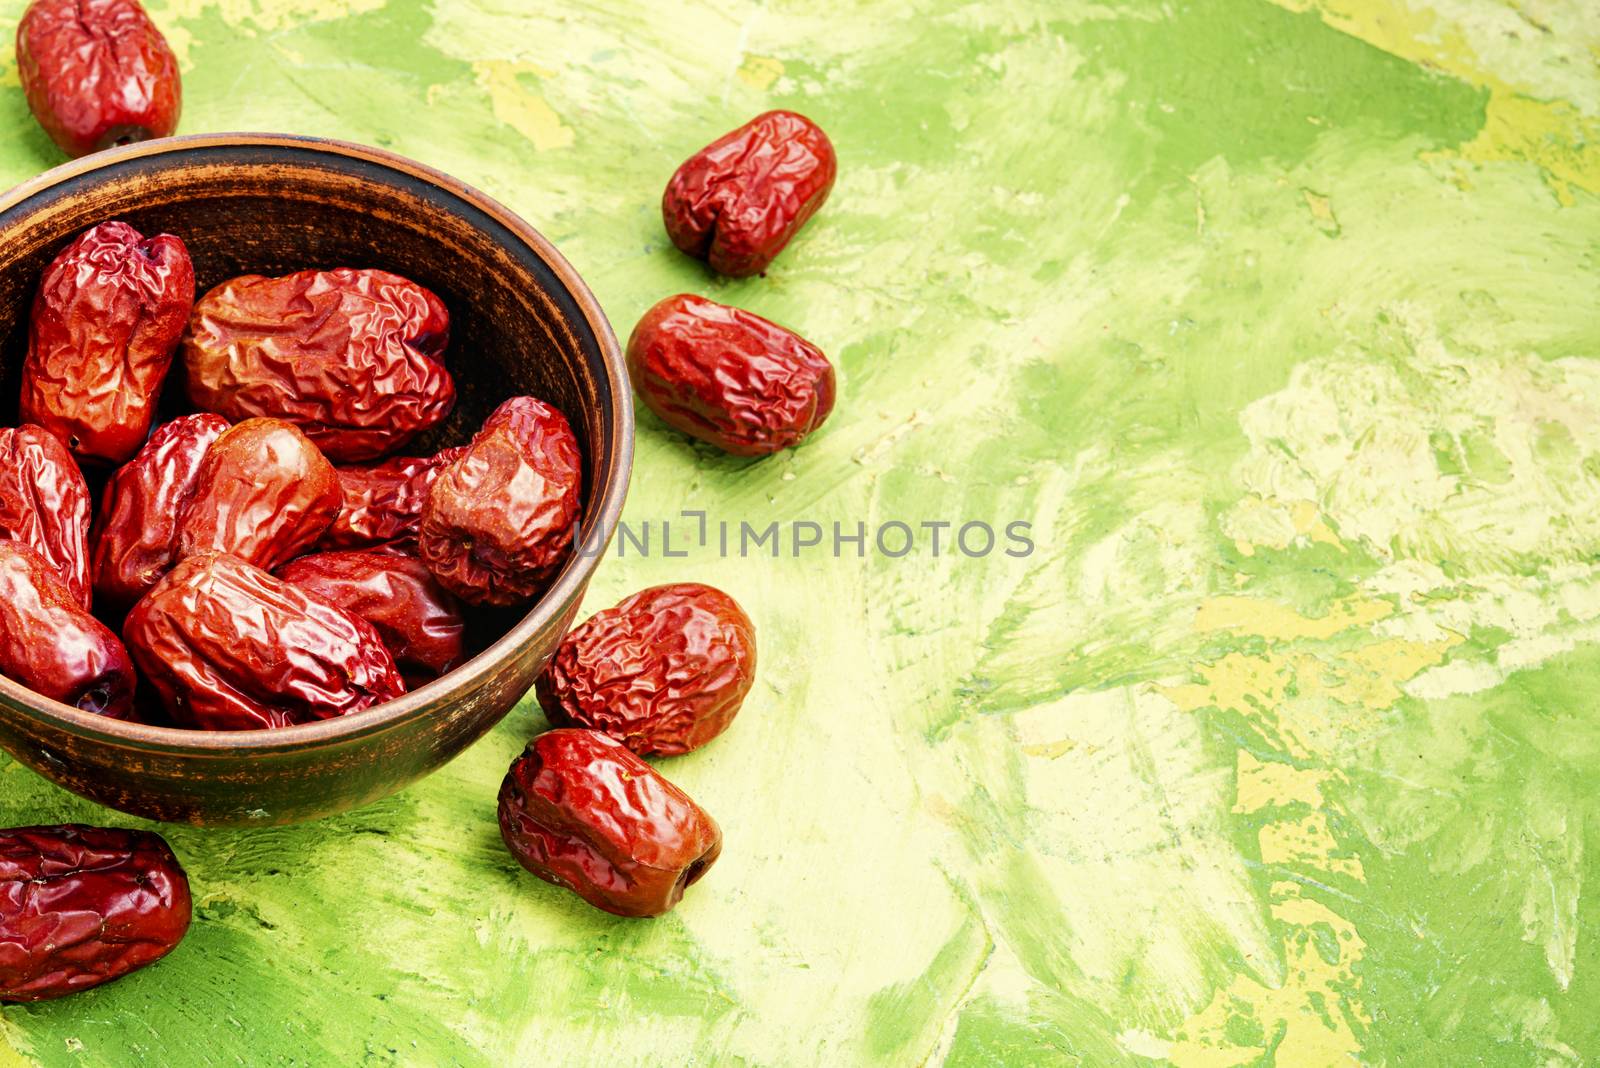 Dried unabi fruit or jujube by LMykola